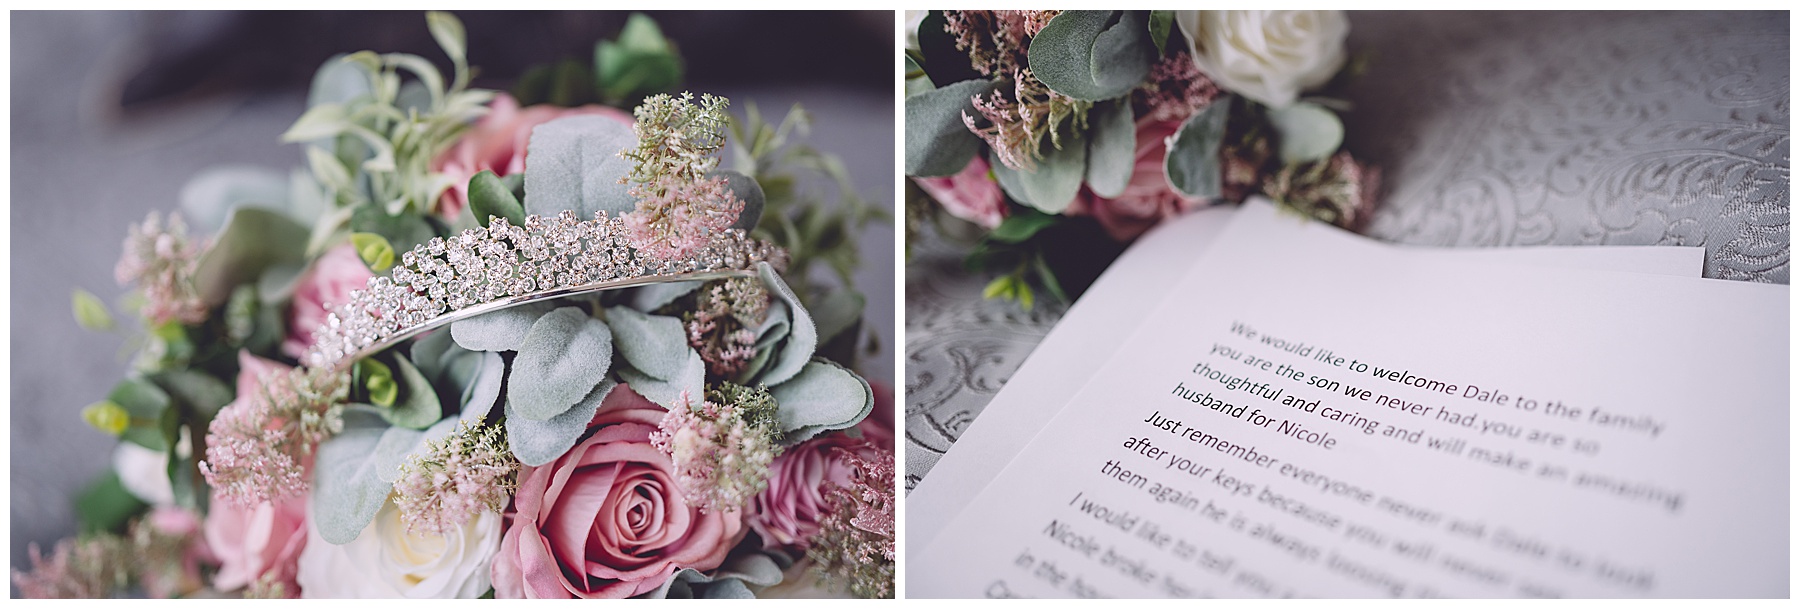 Wedding Flowers & Speech